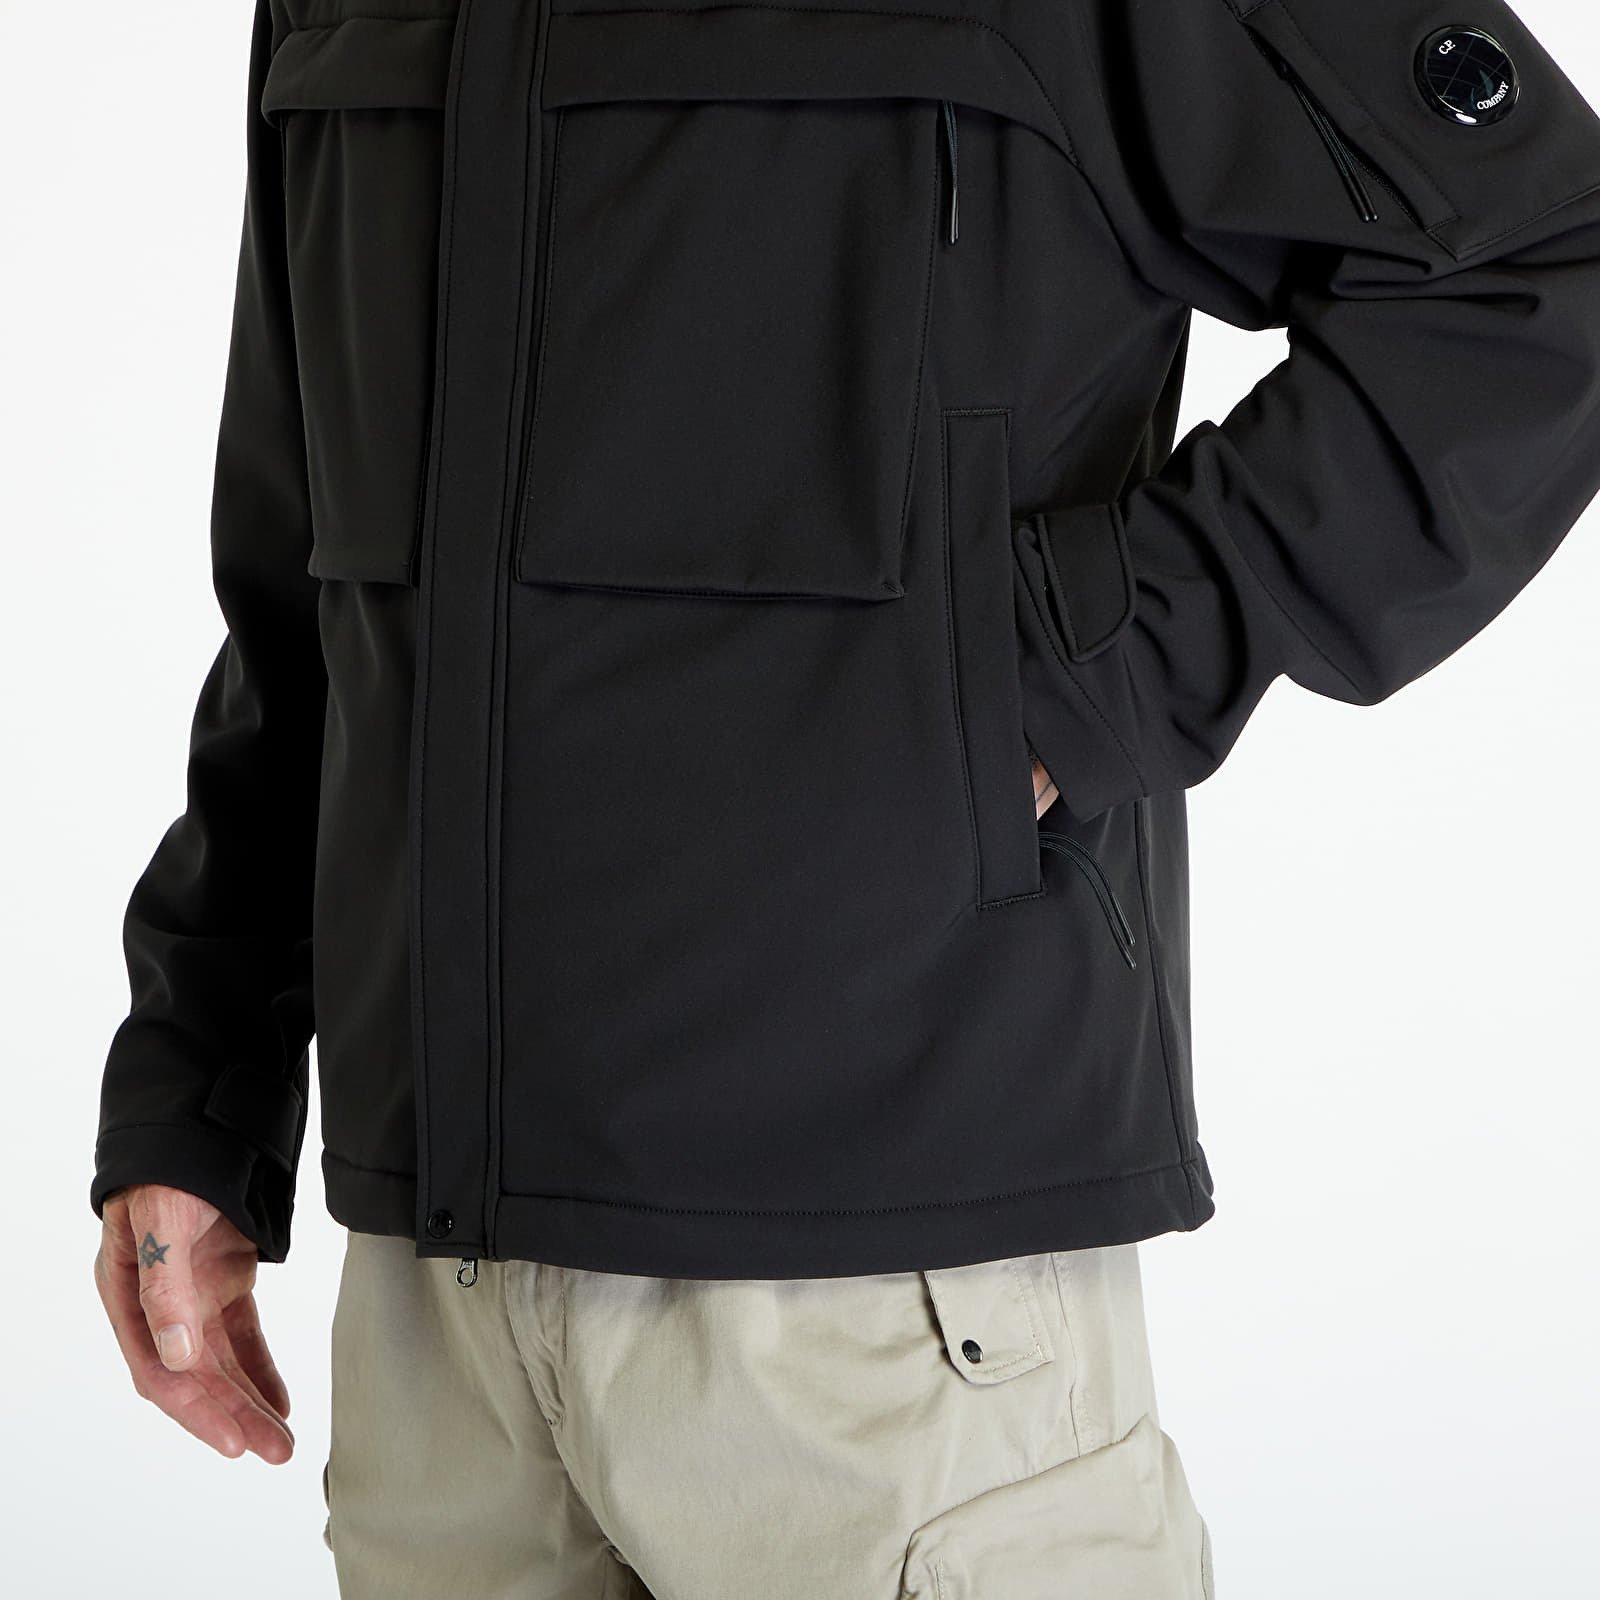 Shell-R Hooded Jacket Black